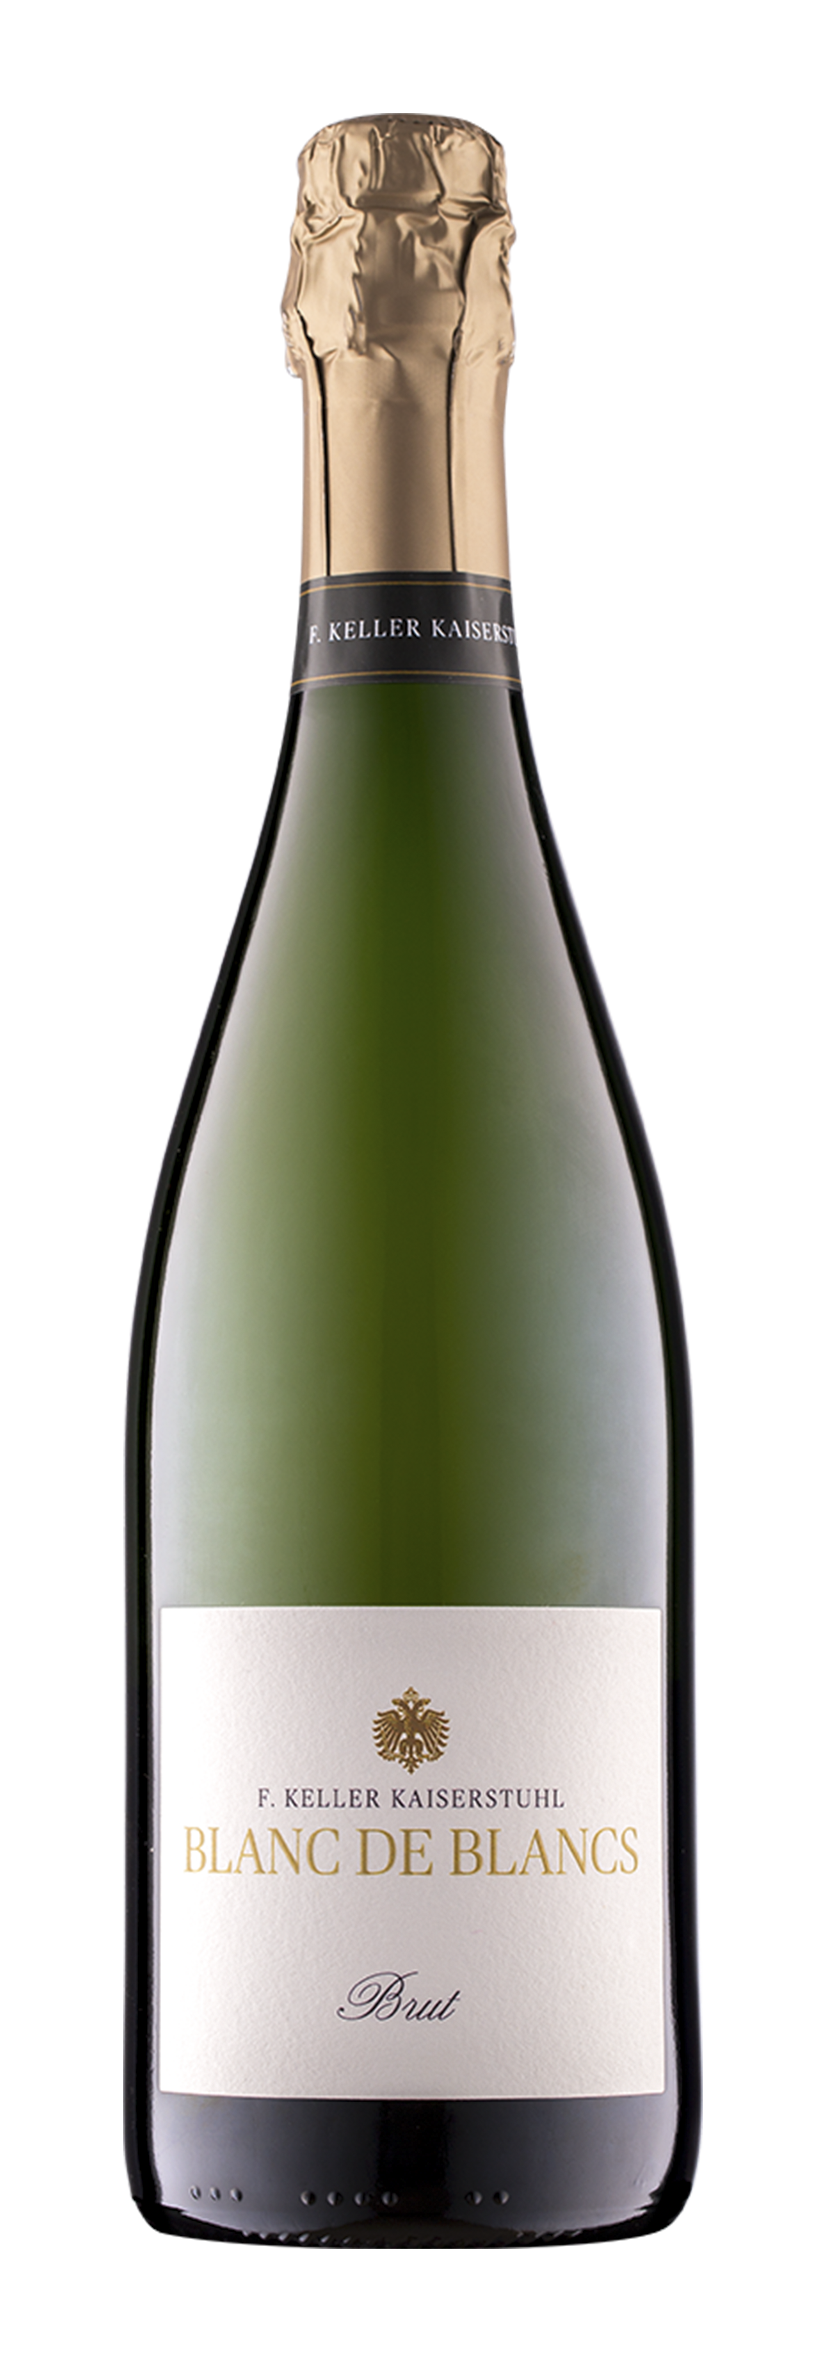 Chardonnay Blanc de Blancs Brut 2017